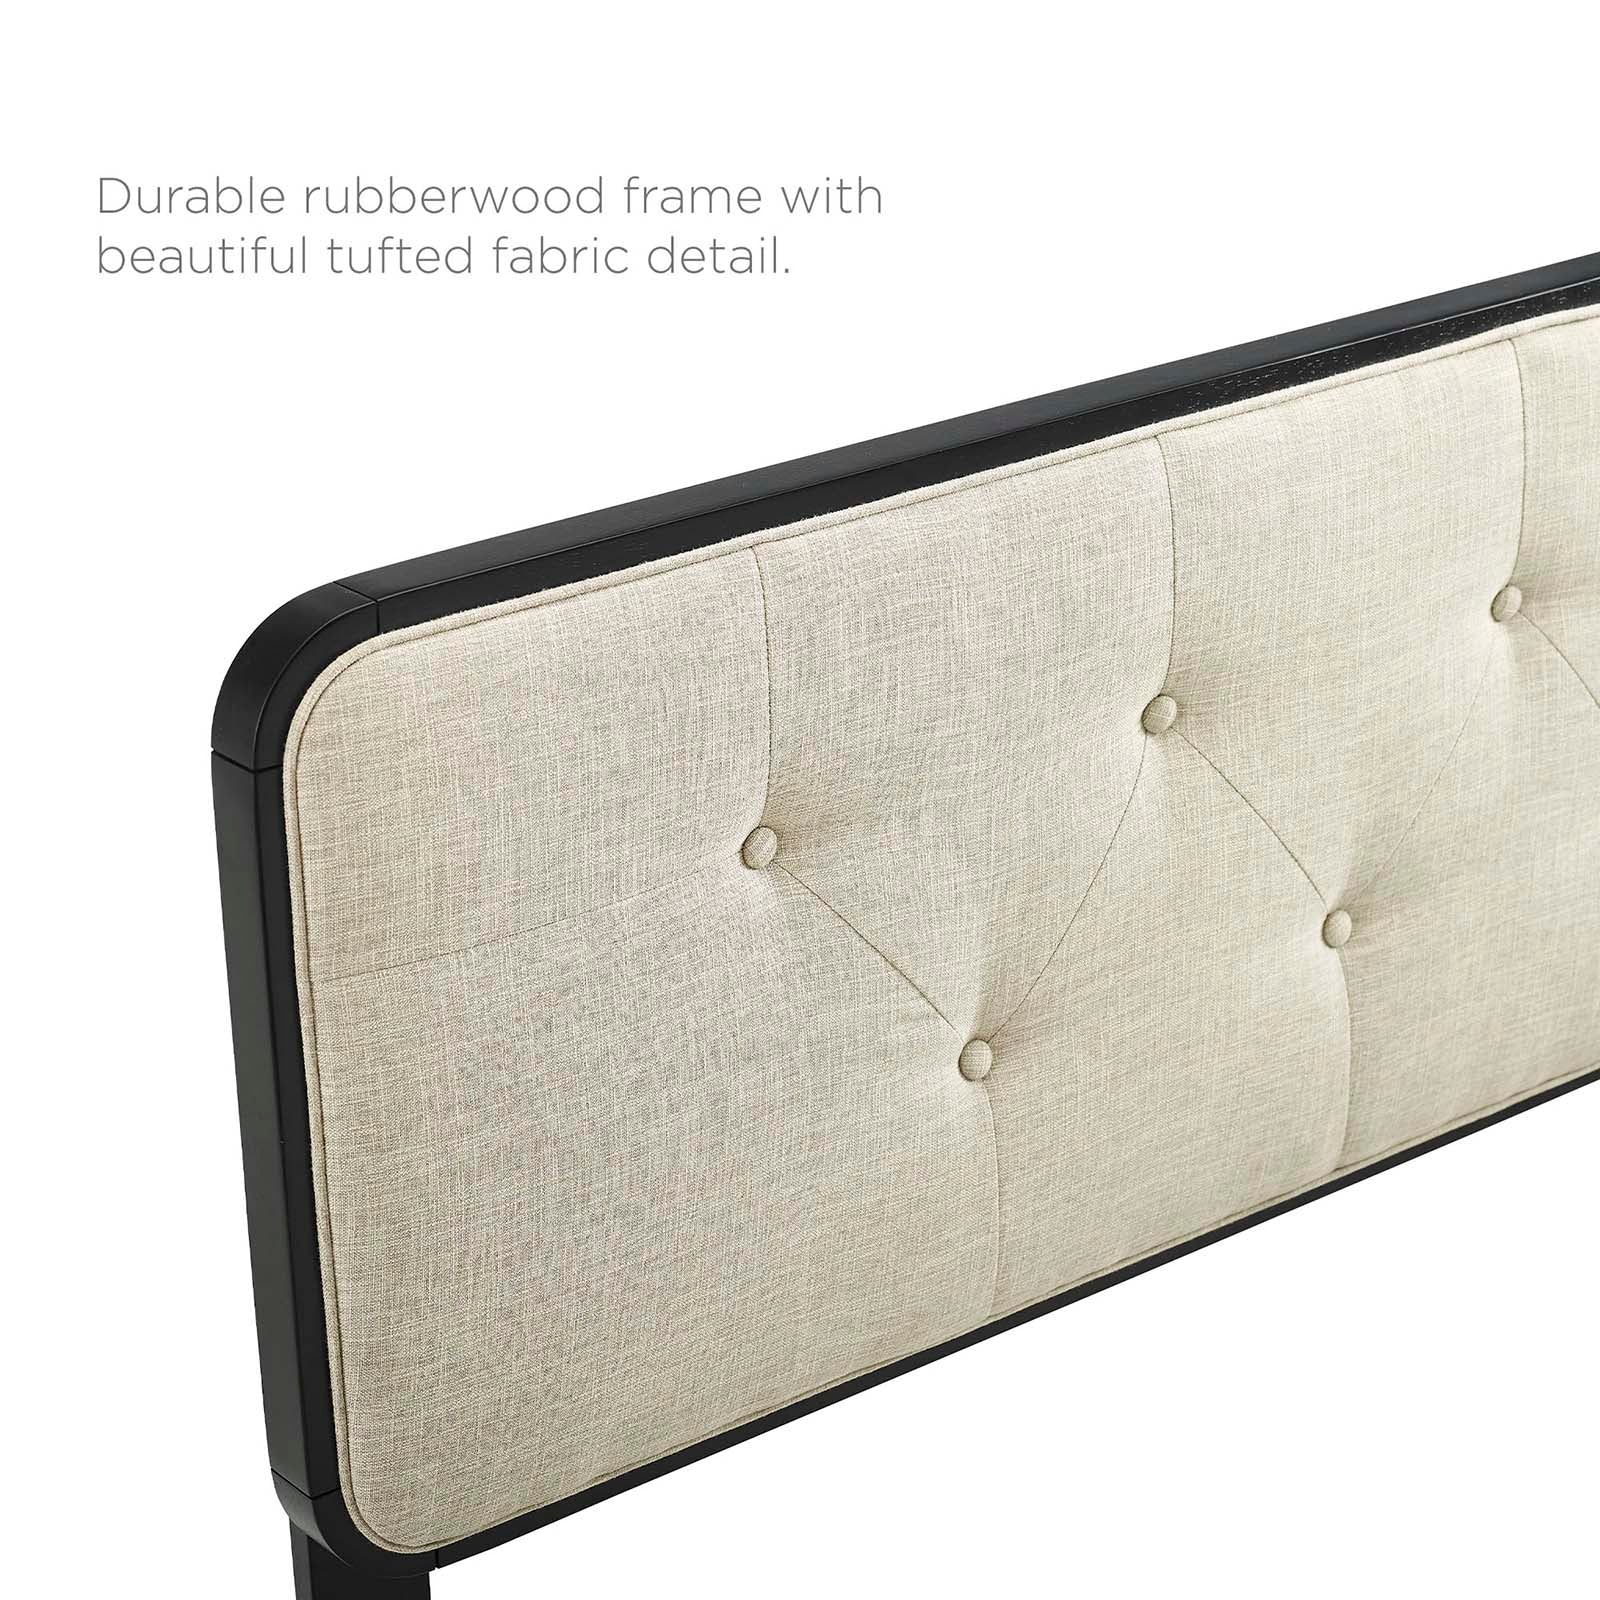 Bridgette Full Wood Platform Bed With Splayed Legs - East Shore Modern Home Furnishings